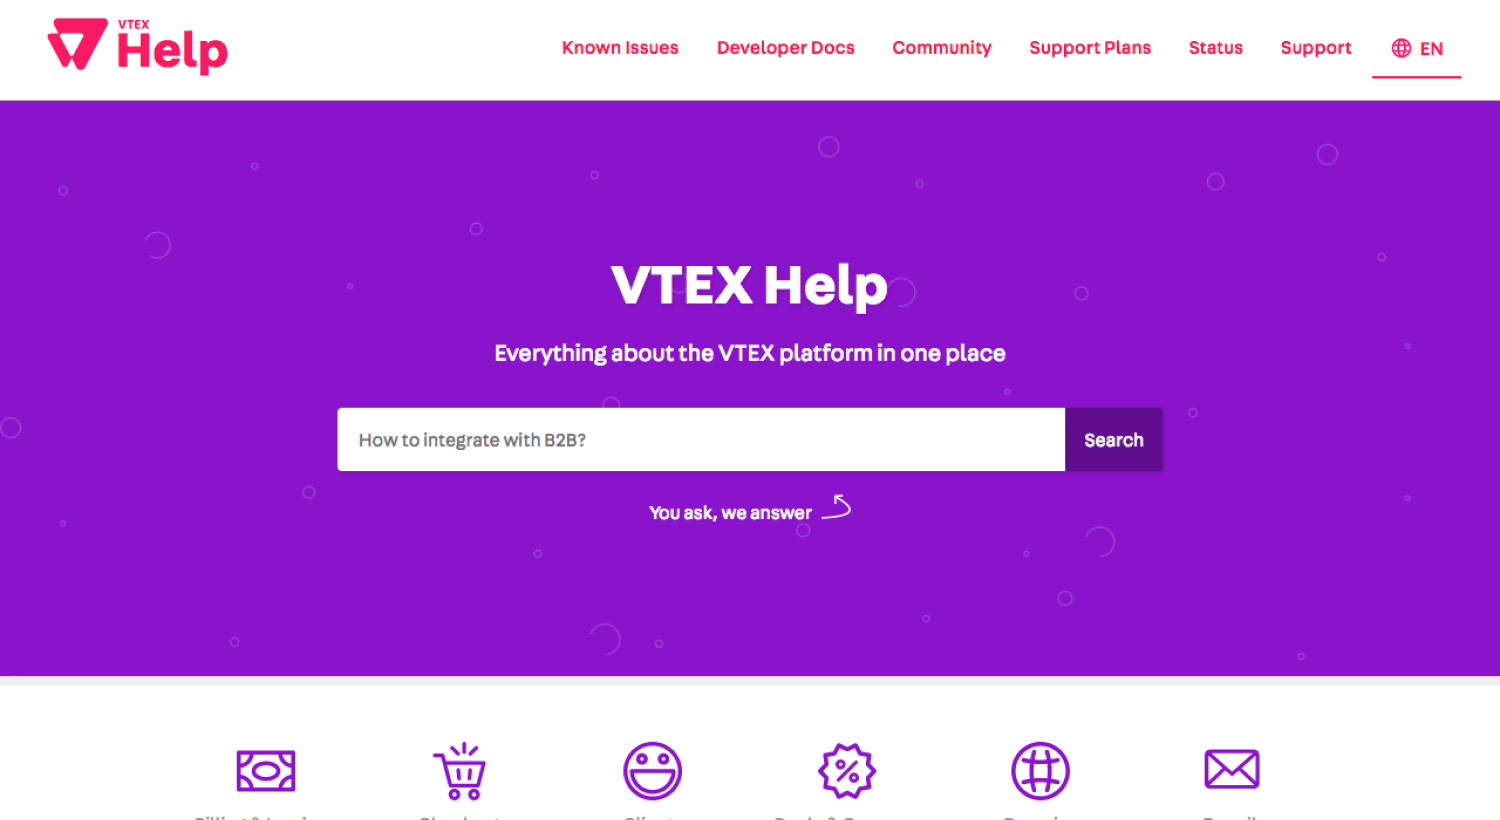 Updated version of VTEX Help